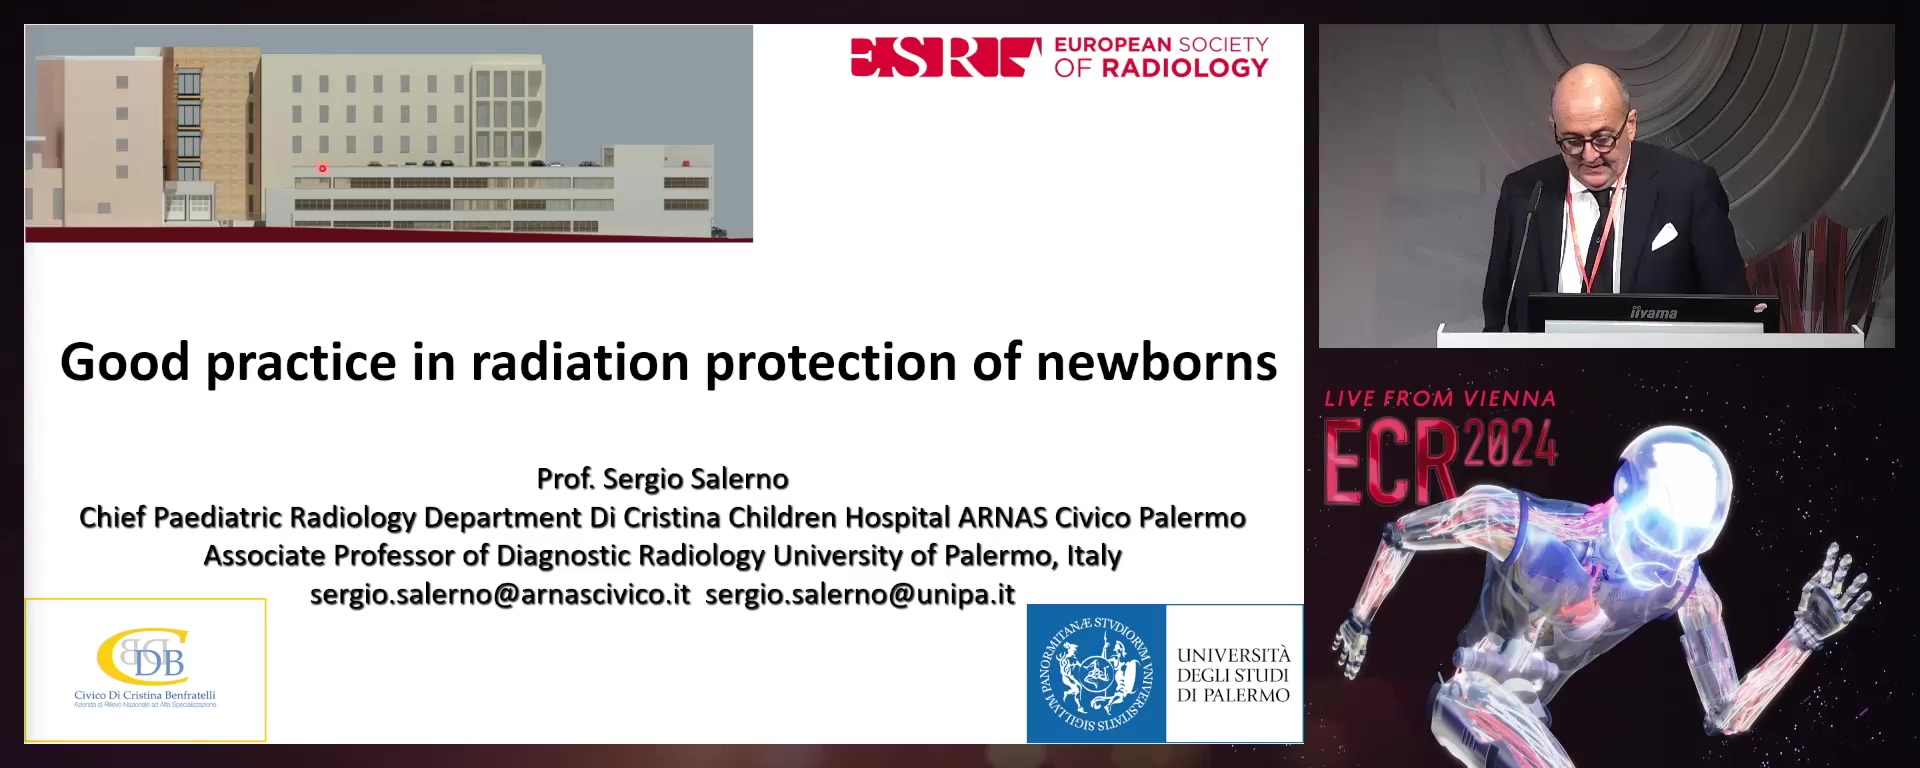 Good practice in radiation protection of newborns